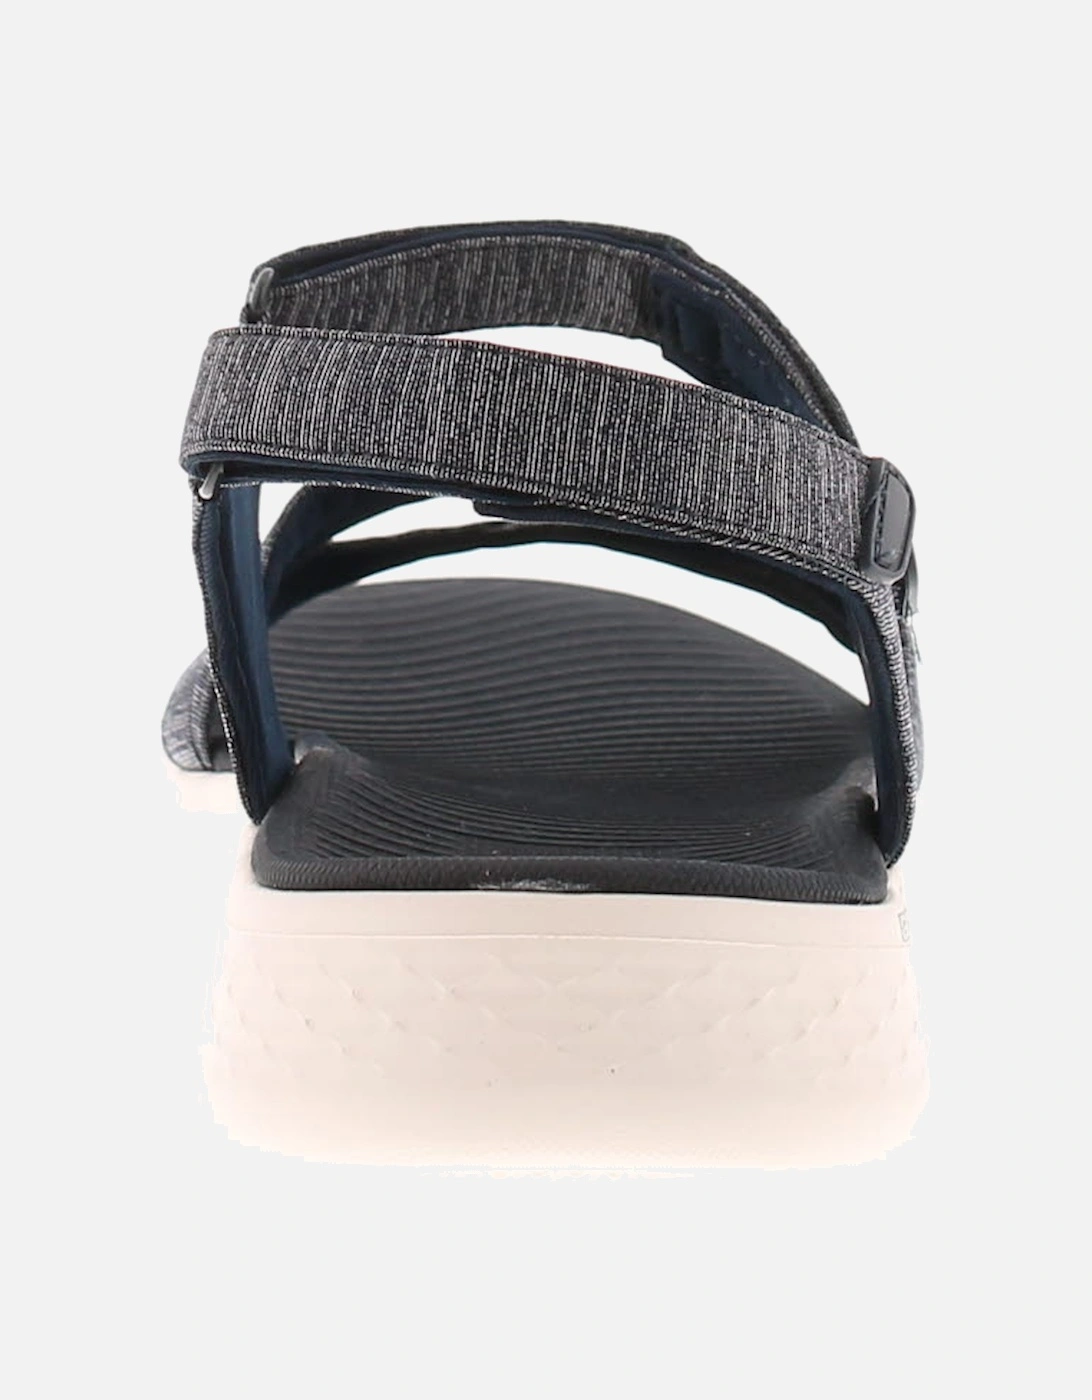 Skechers Womens Flat Sandals Go Walk Flex Sandal Touch Fastening navy UK Size